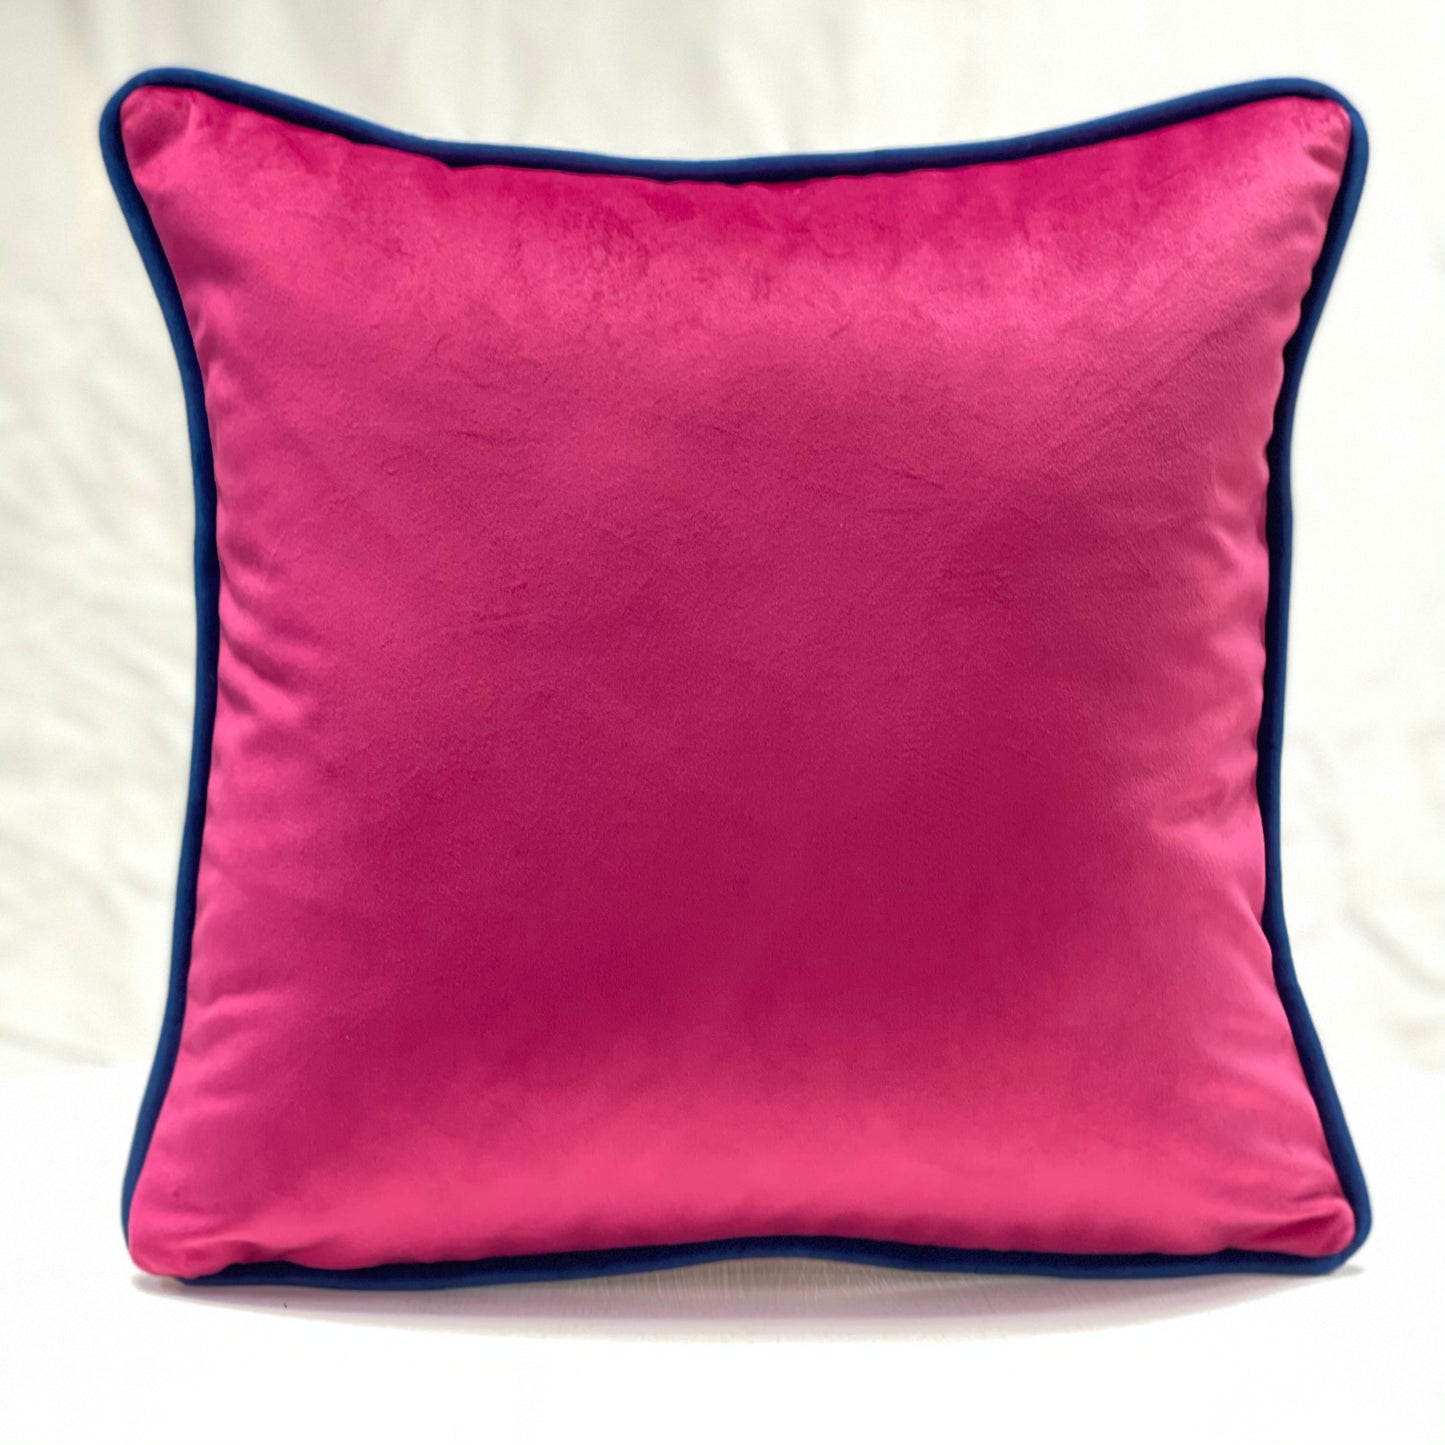 Fuchsia pink velvet piped cushion